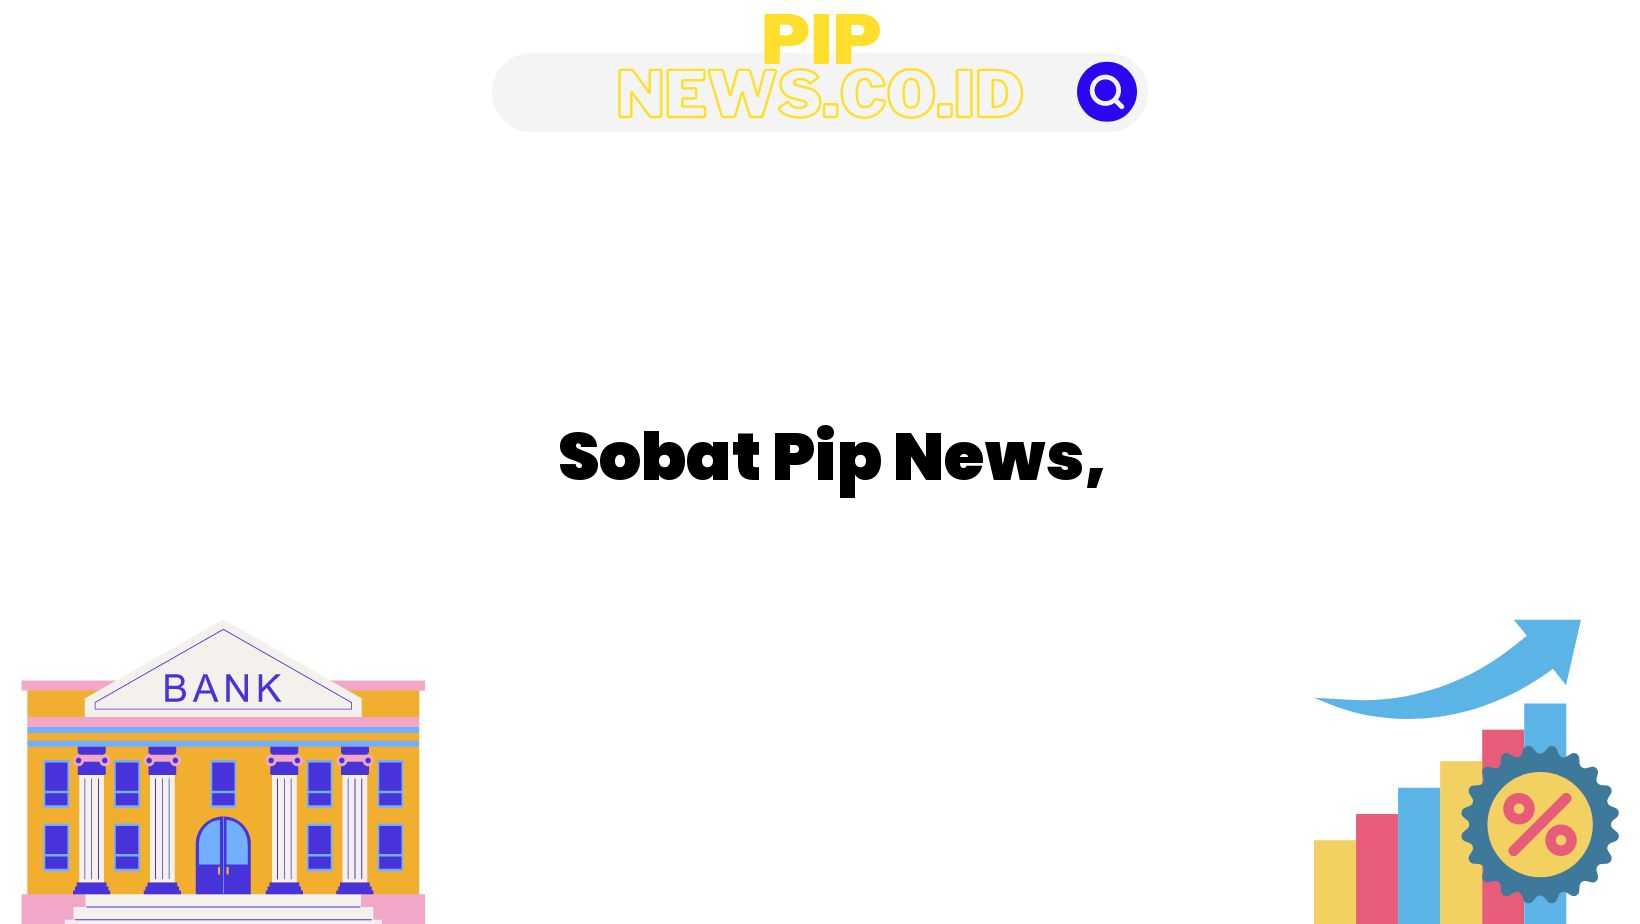 Sobat Pip News,